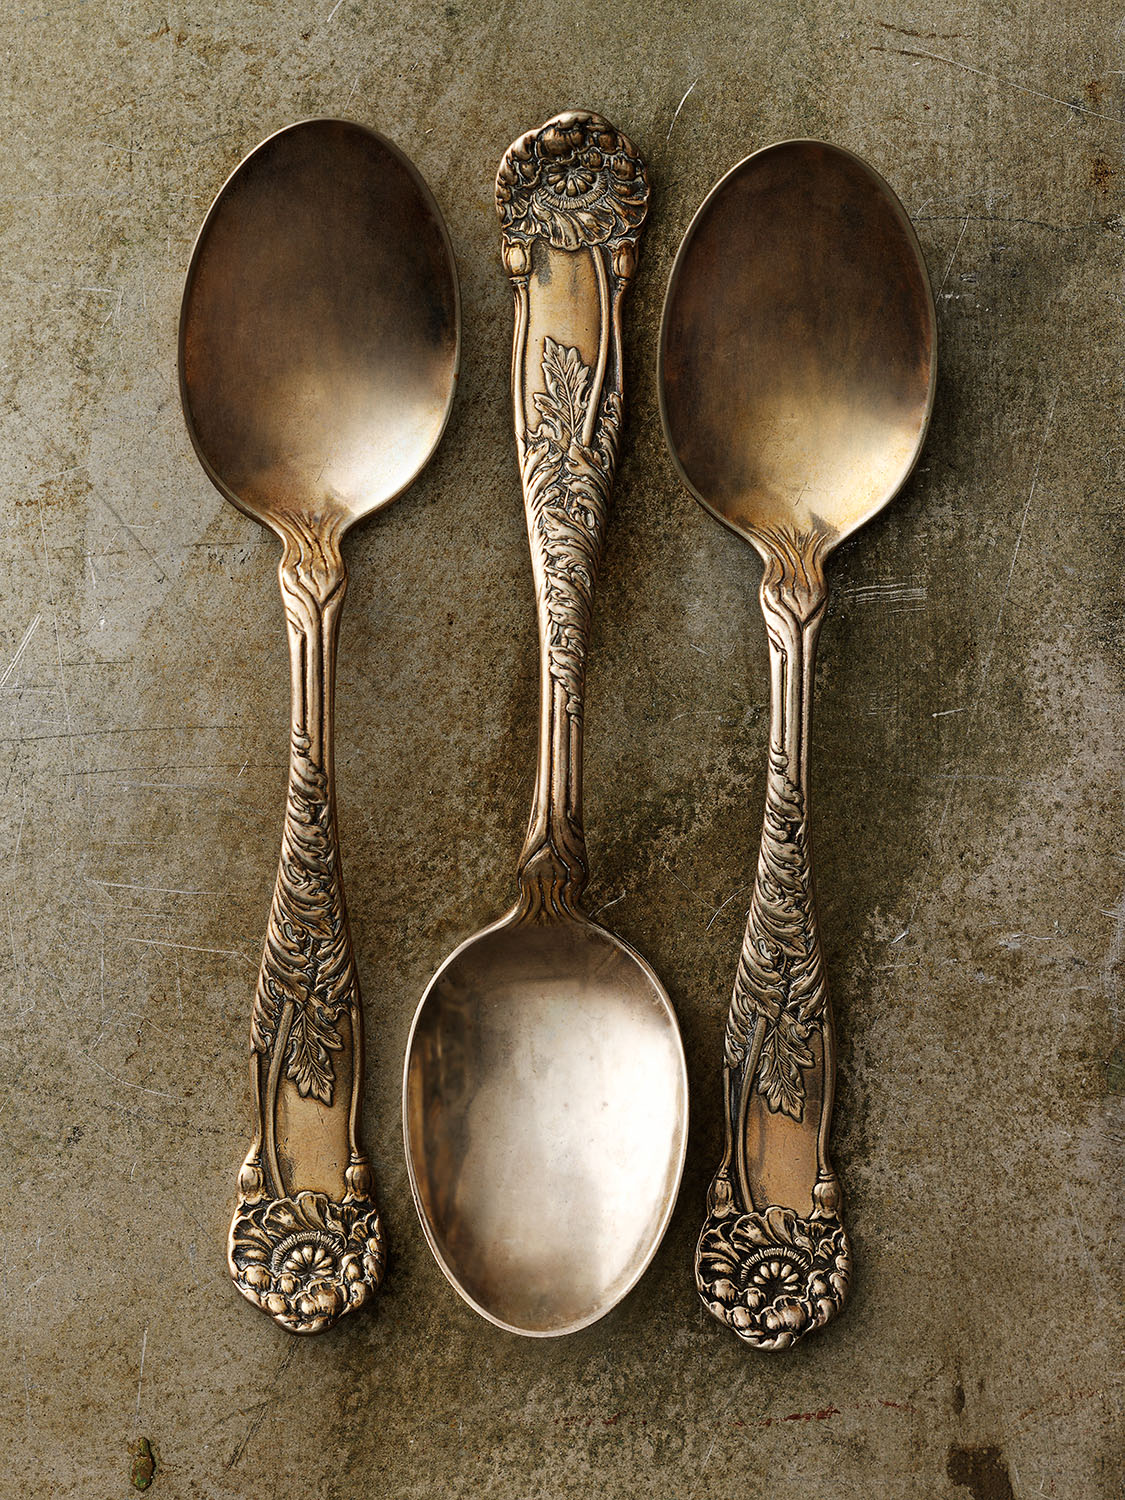 #21 Three Tarnished Spoons